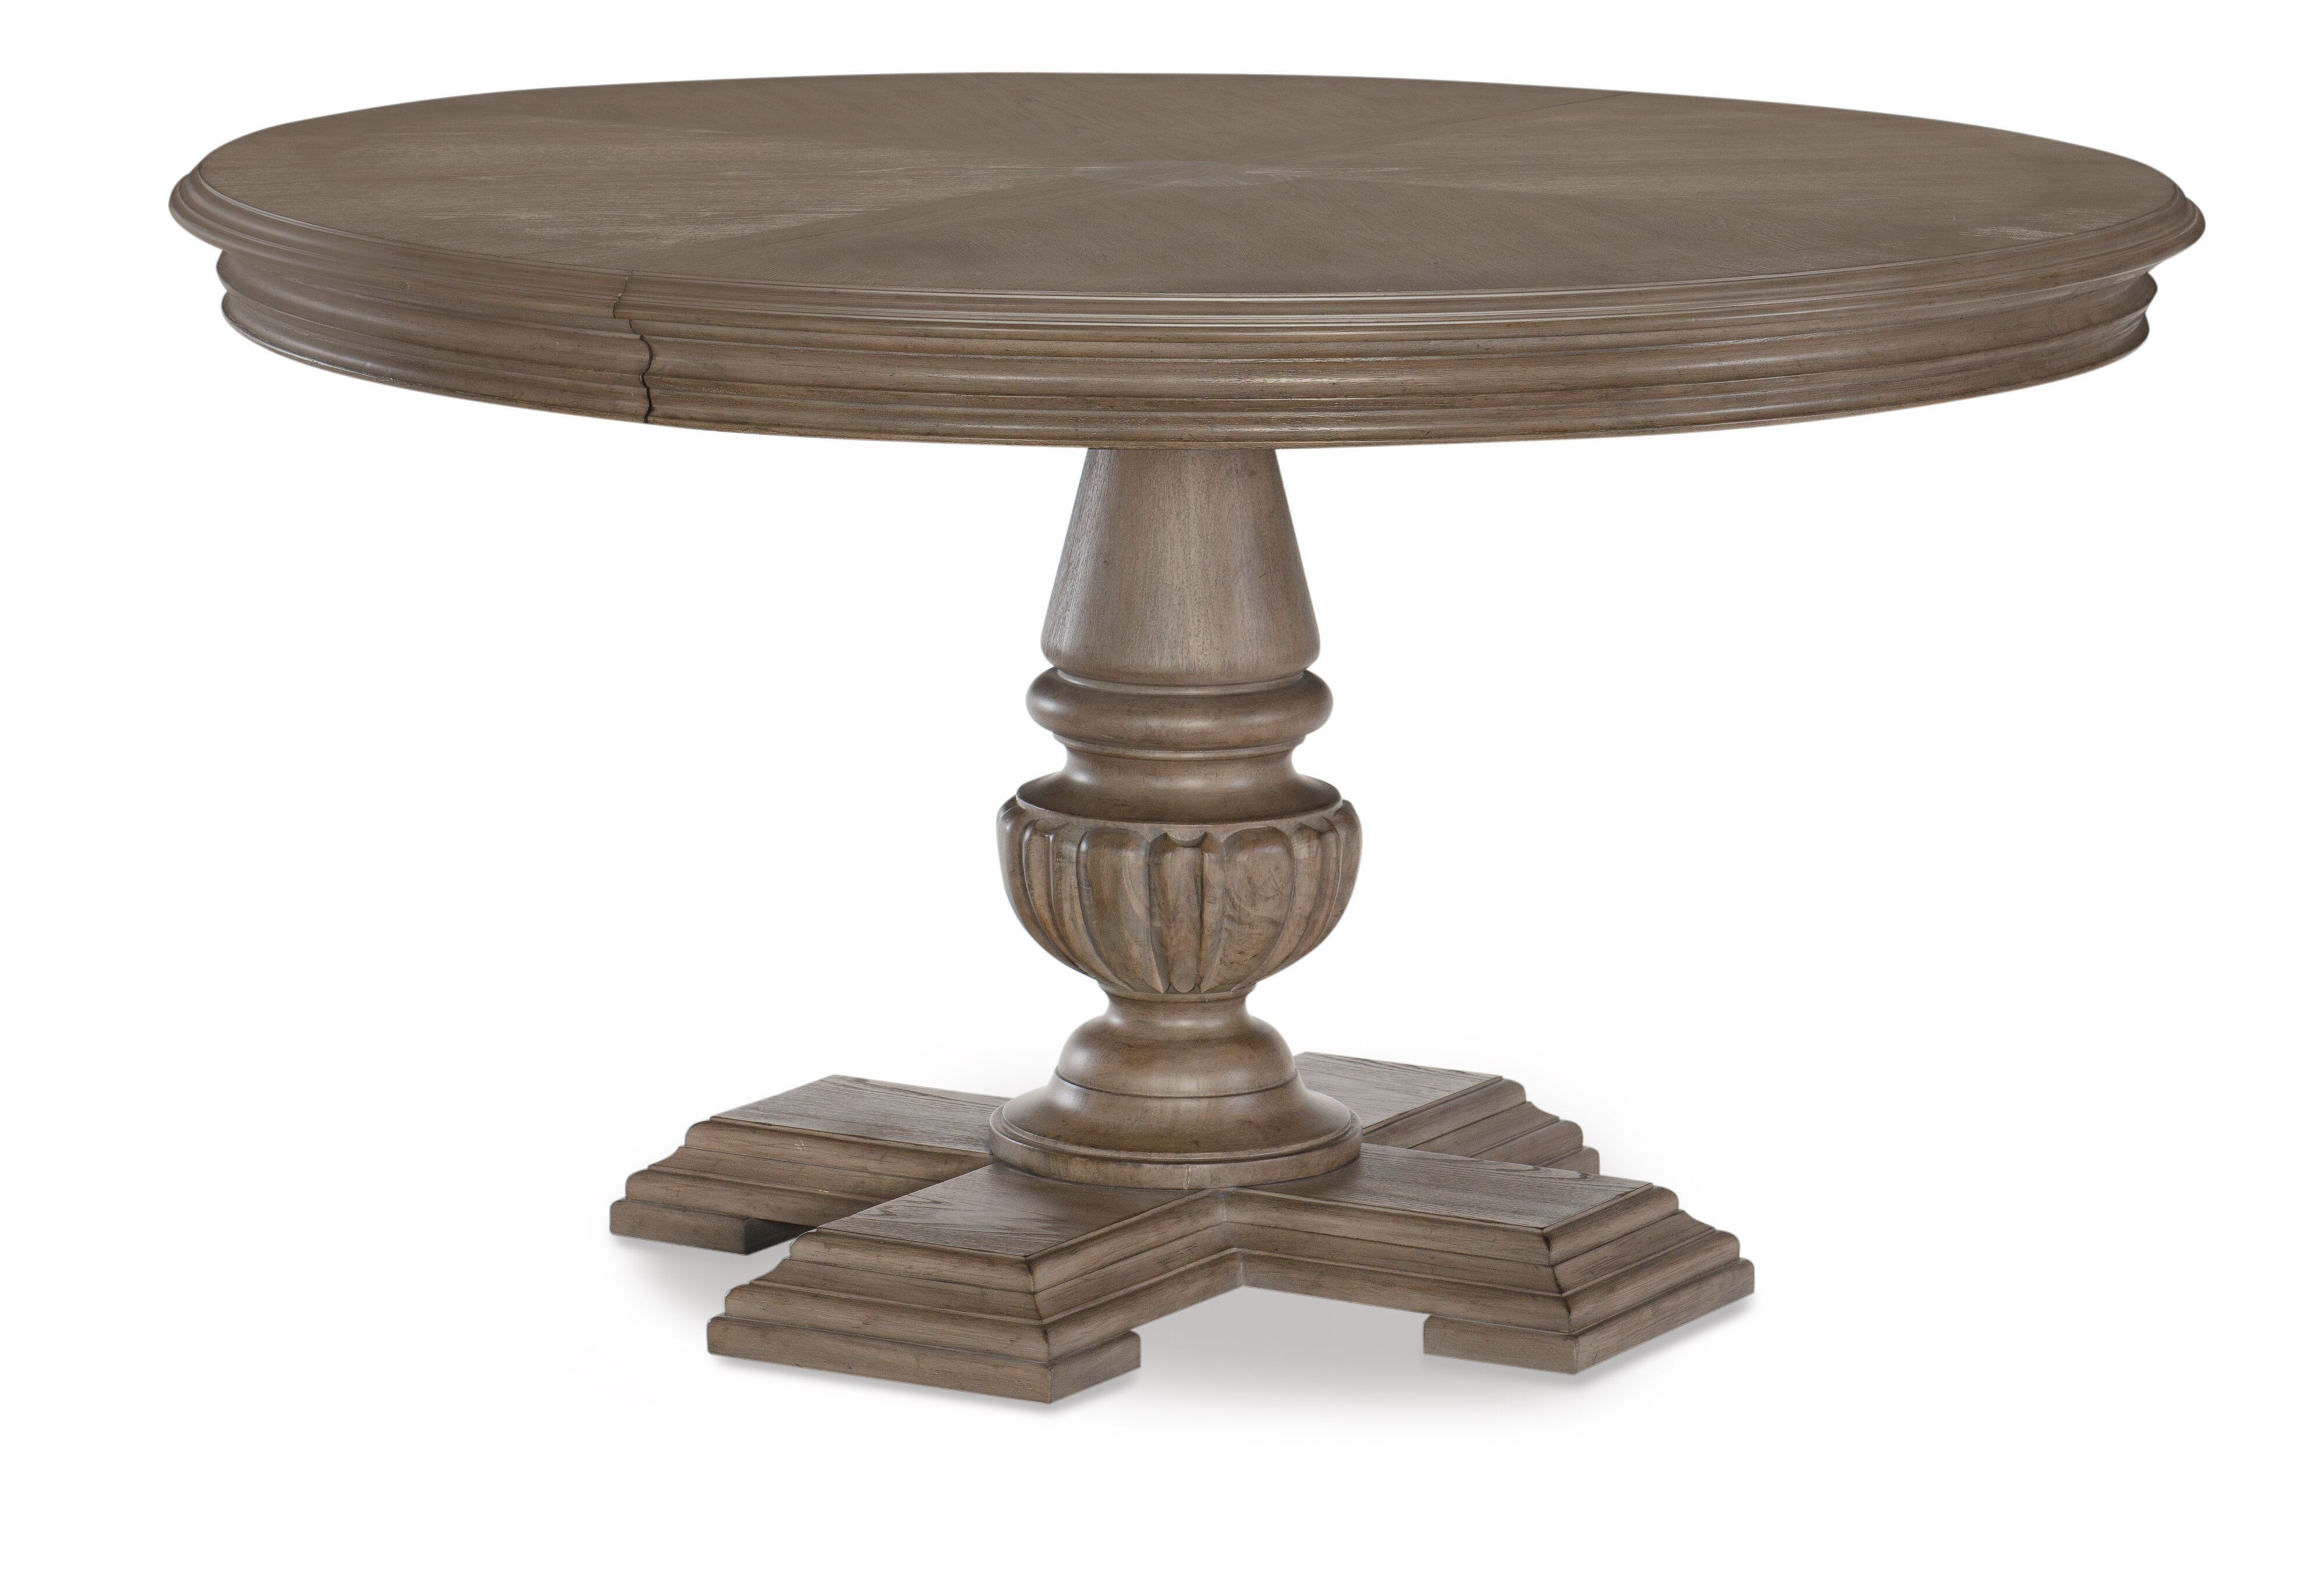 Darby Home Co Bonham Extendable Pedestal Dining Table Reviews Wayfair